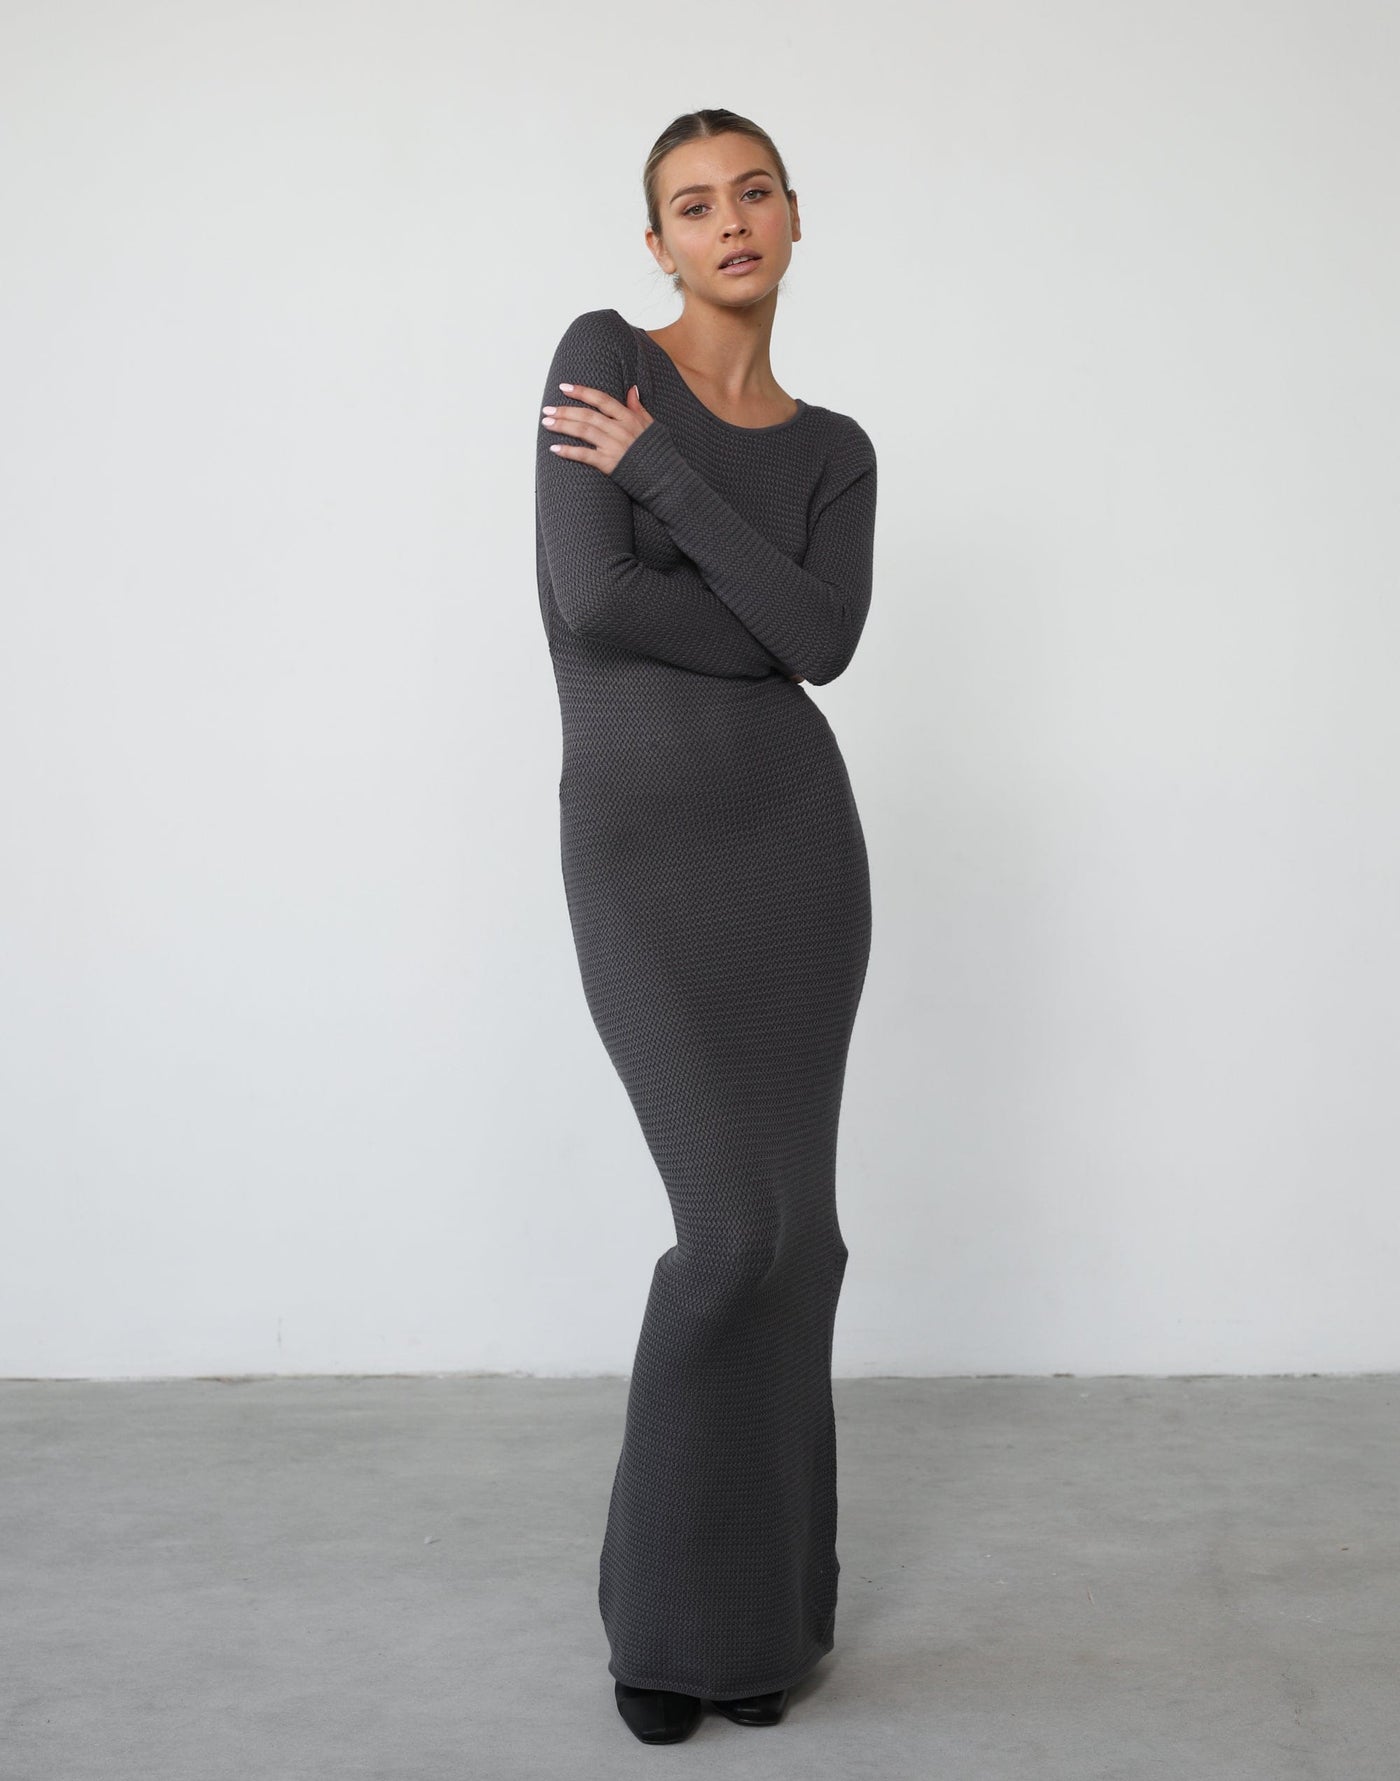 Jayda Long Sleeve Maxi Dress (Charcoal) - Knitted Grey Backless Maxi Dress - Women's Dresses - Charcoal Clothing